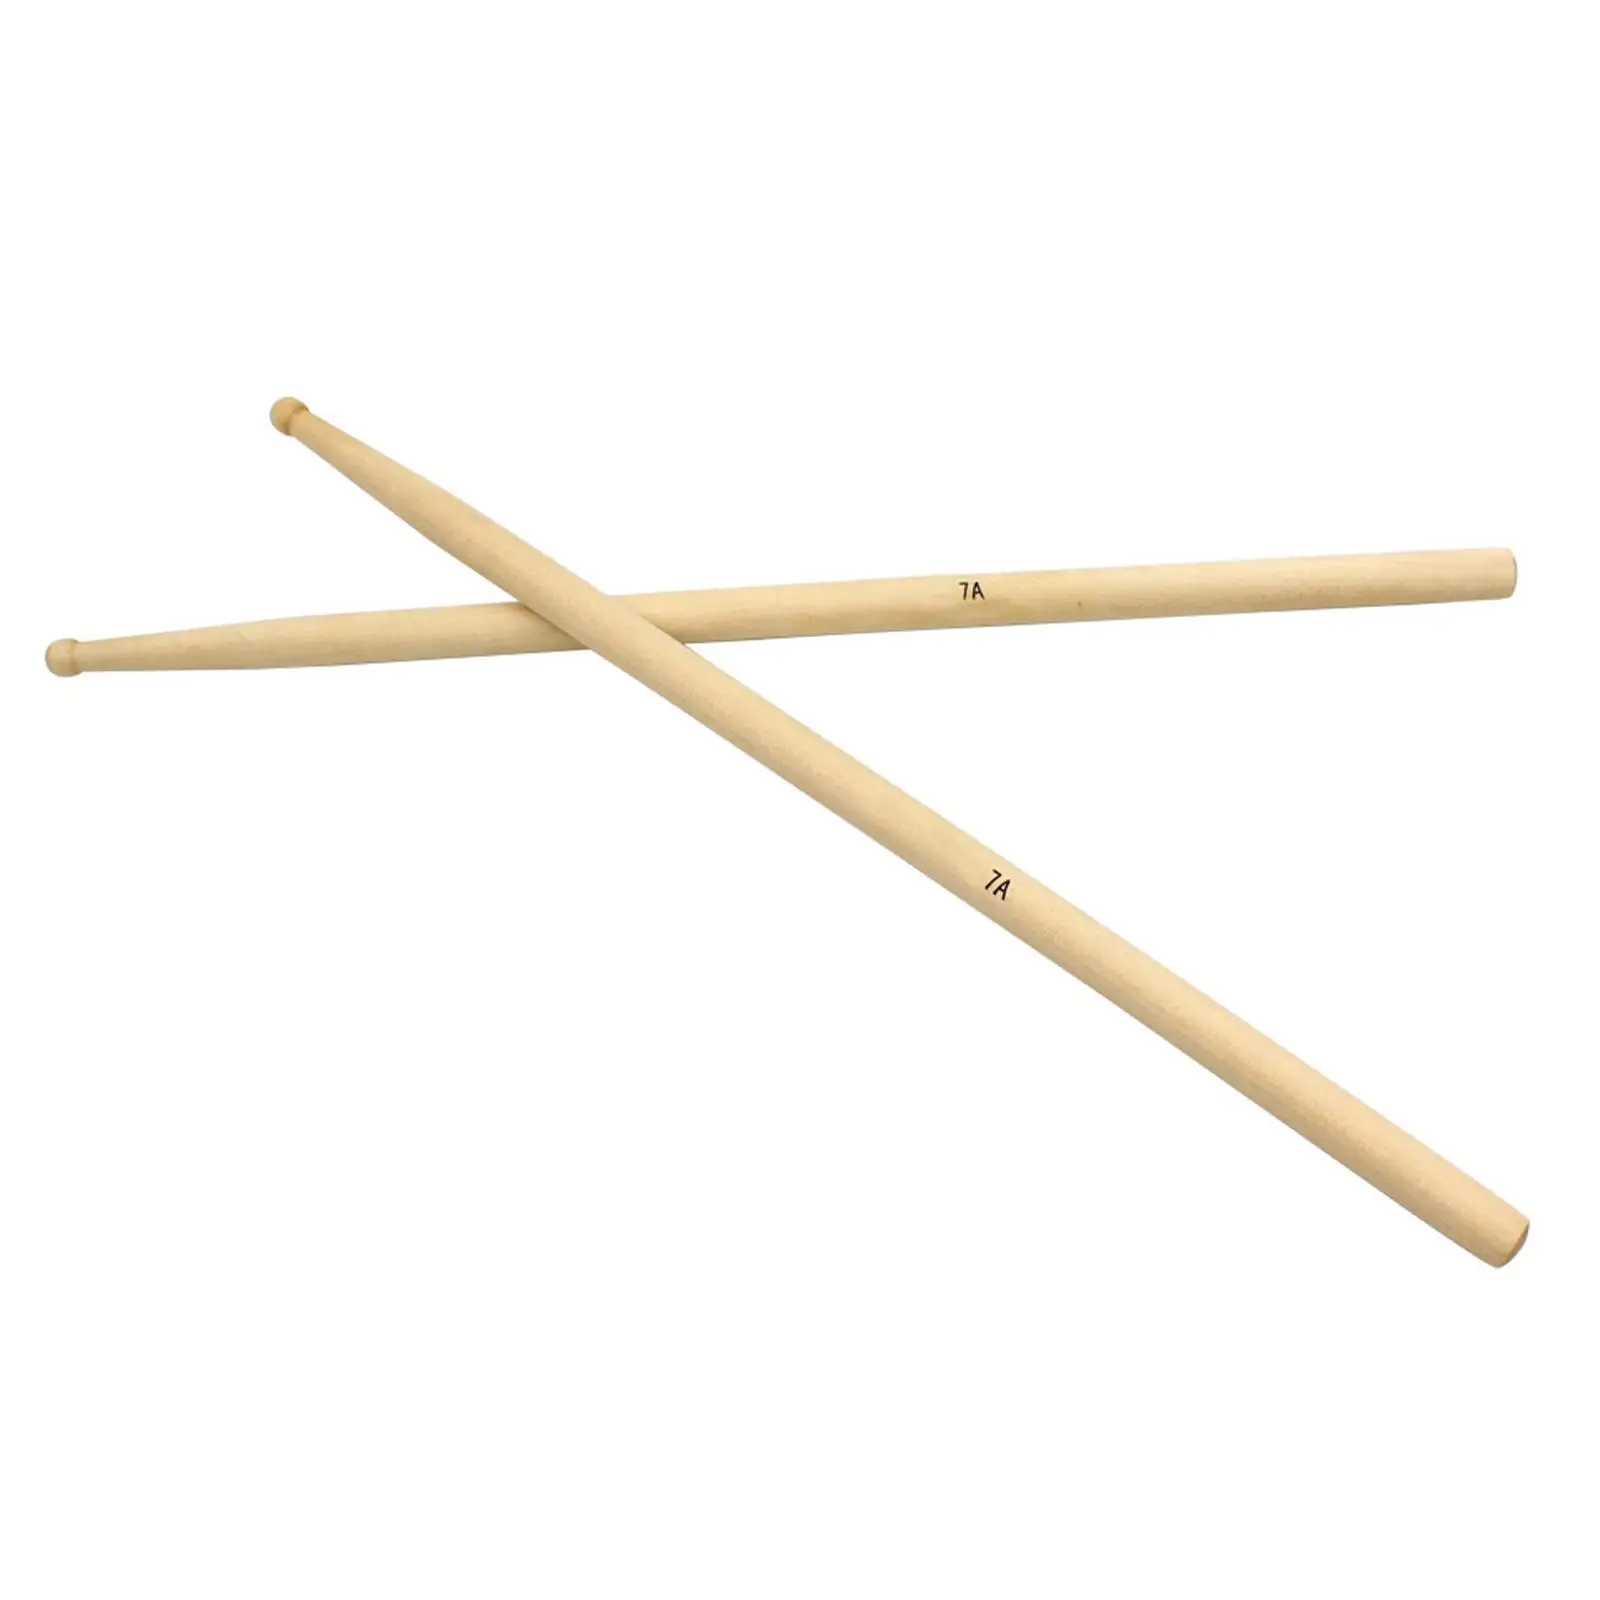 Wooden Drumstick Drum Sticks 7A Drumstick Wood Tip Drumstick for Beginners Professionals